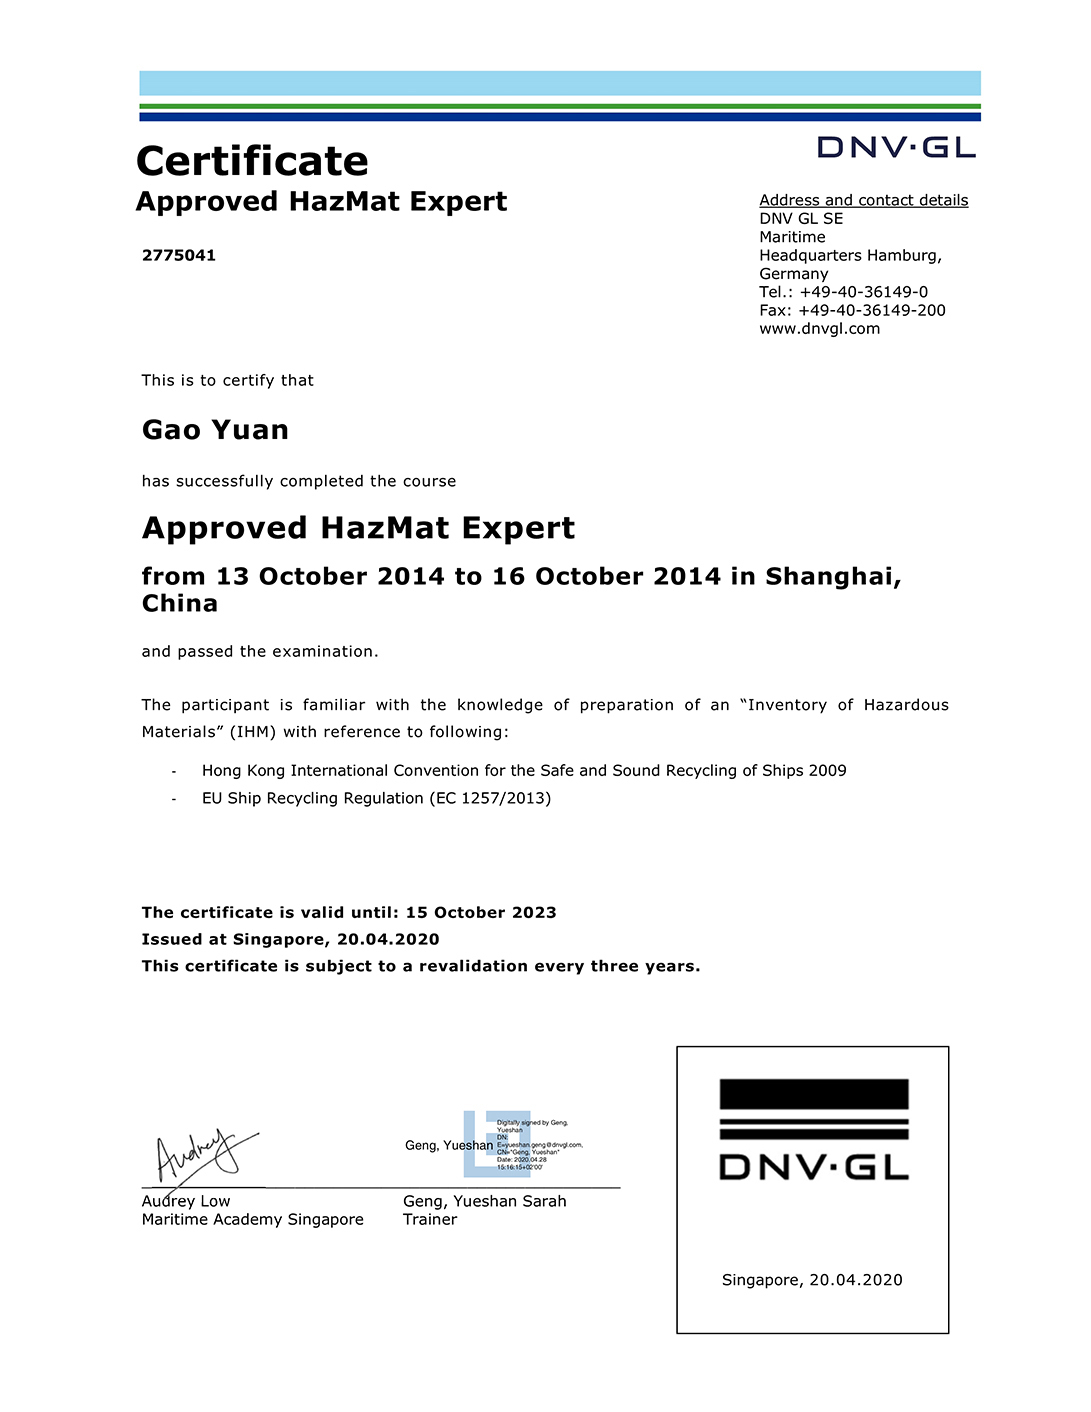 Approved HazMat Expert-Gaoyuan-2020